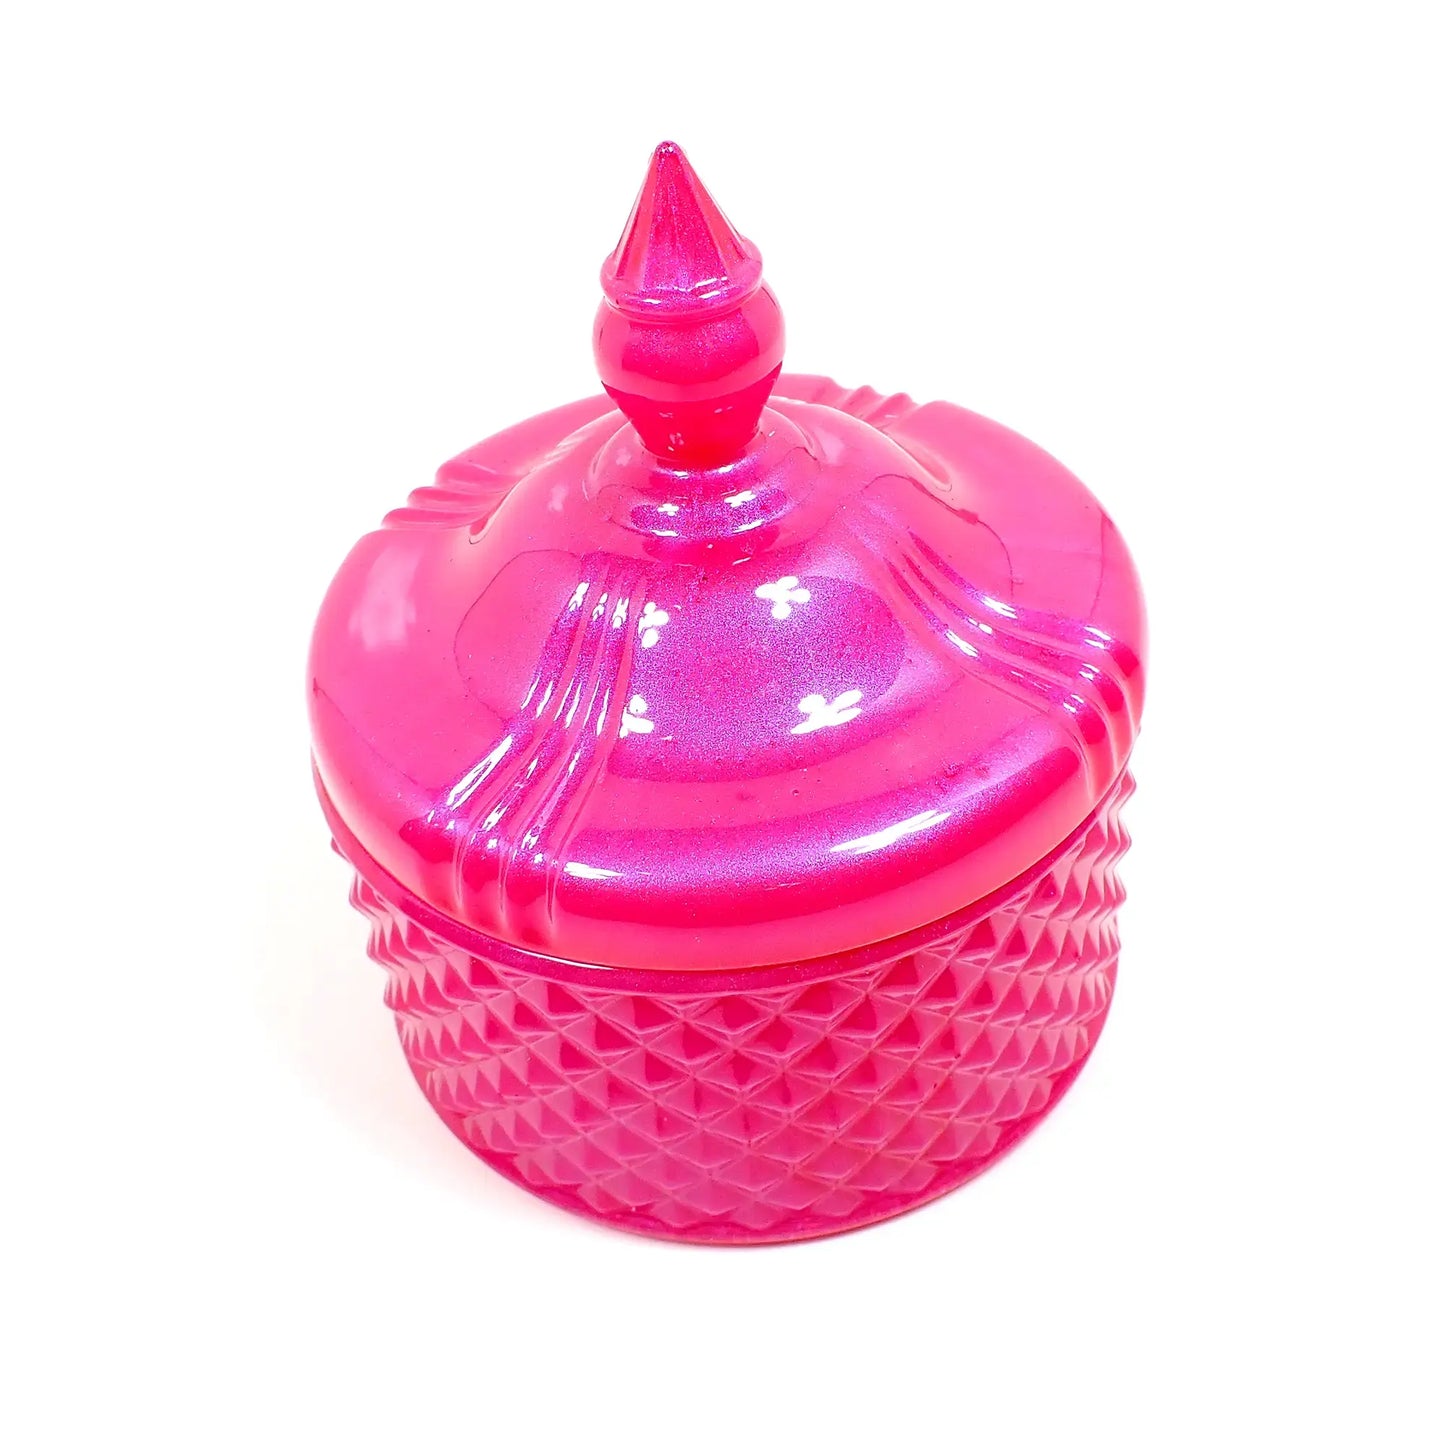 Handmade Pearly Bright Hot Pink Trinket Box Candy Dish